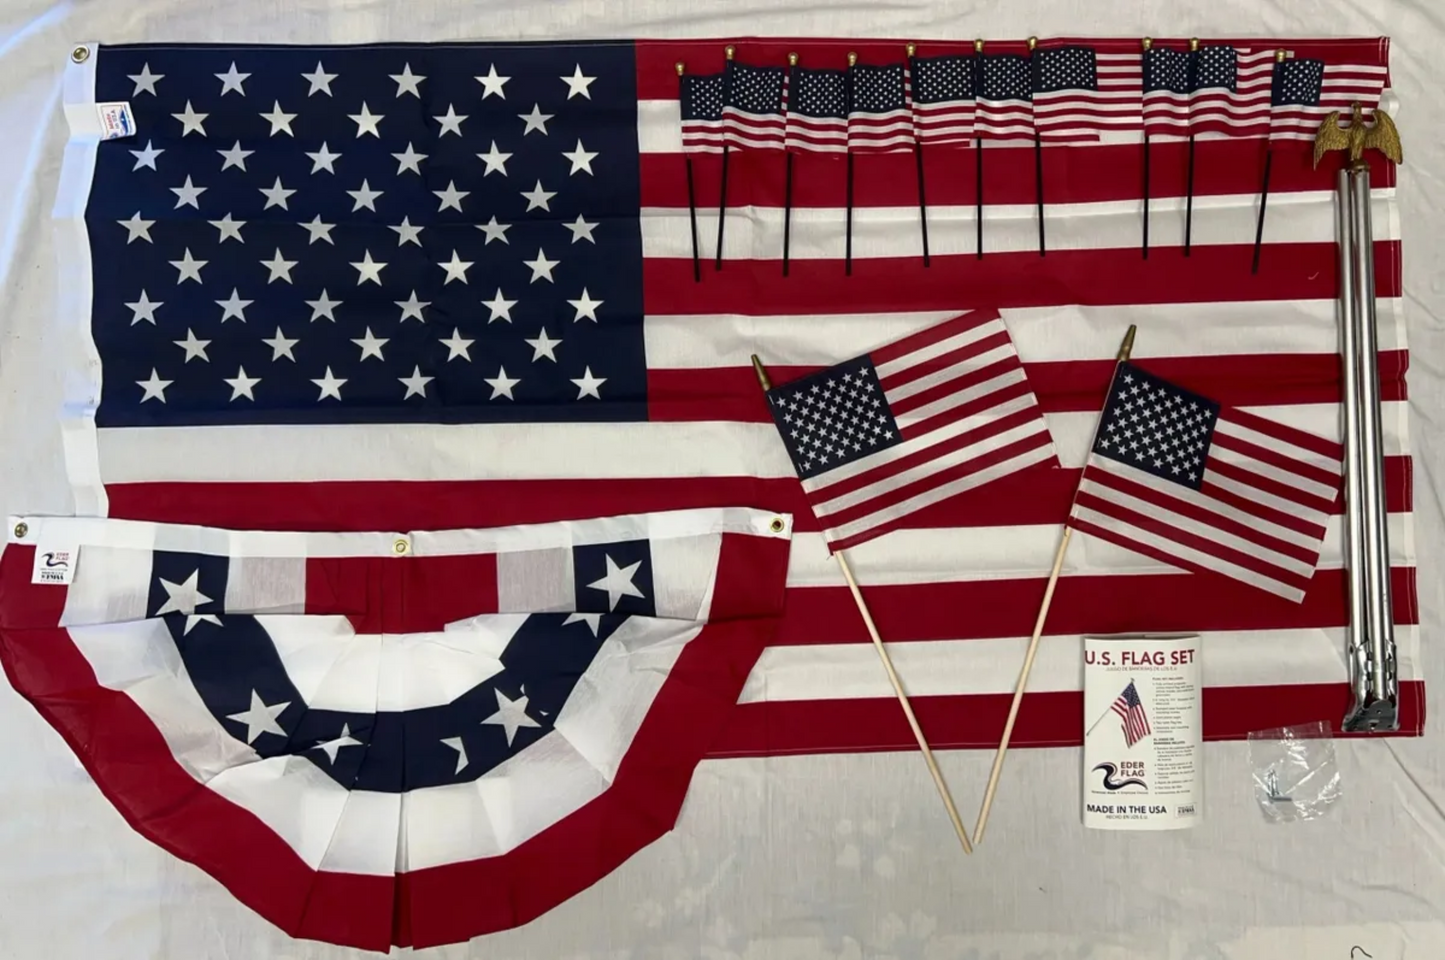 US 3'x5' Patriotic Flag set